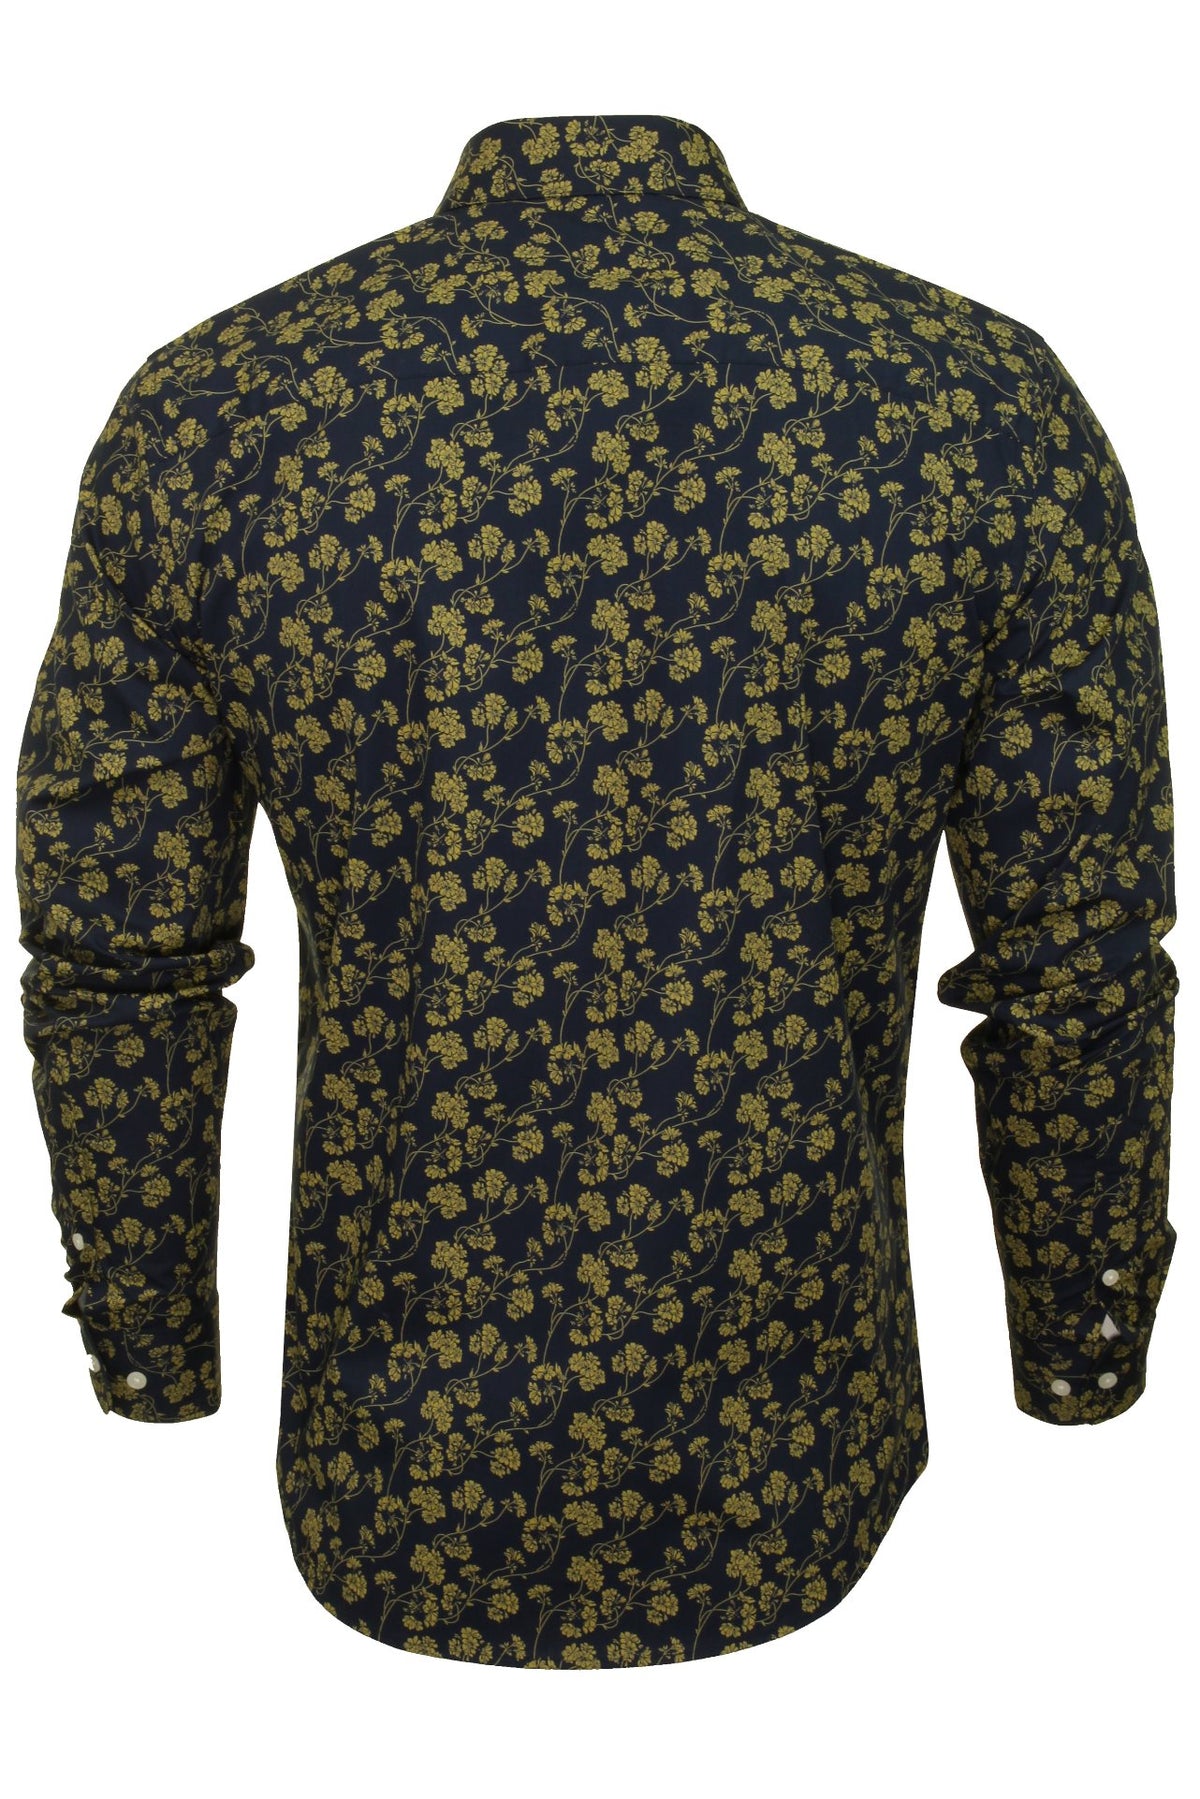 Mens Jack & Jones Floral Long Sleeved Shirt 'JPR ARIZONA', 03, 12145450, Misted Yellow